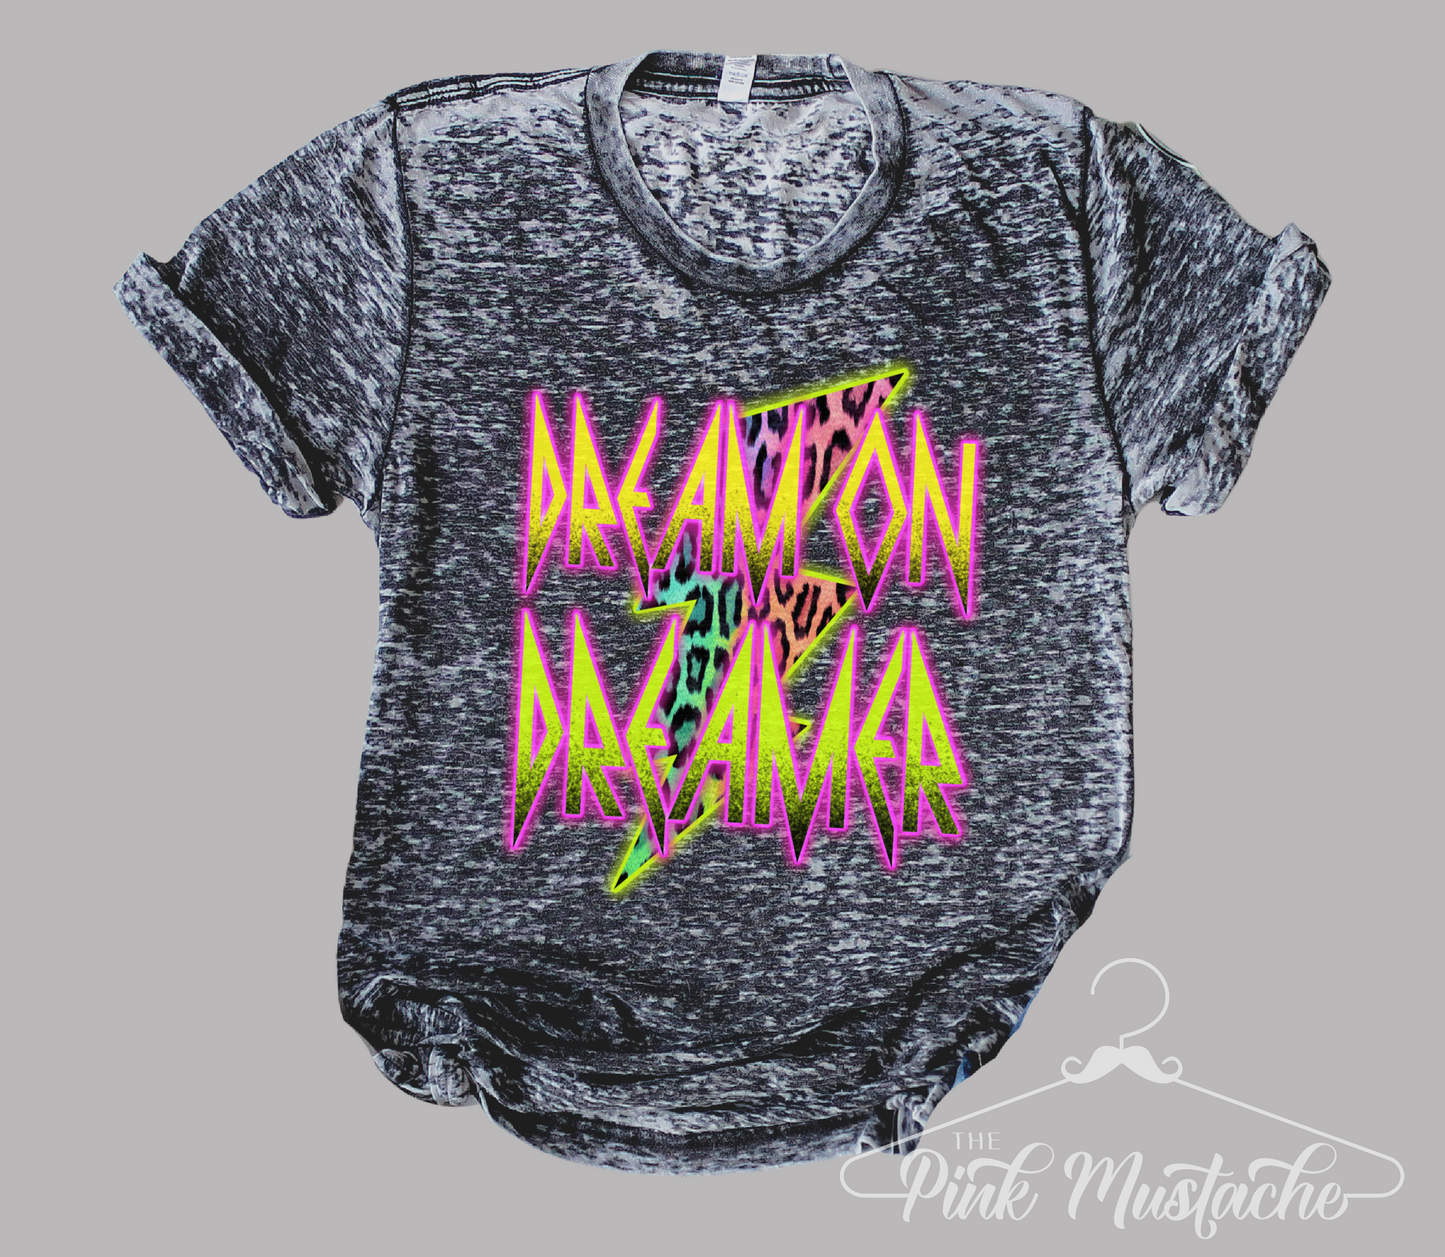 Acid Washed Dream On Hippie Rocker Tee/ Super Cute Dyed Rocker Tees - Unisex Sized/ Vintage Rock N Roll Styled Hippie Shirt/ Rock Band